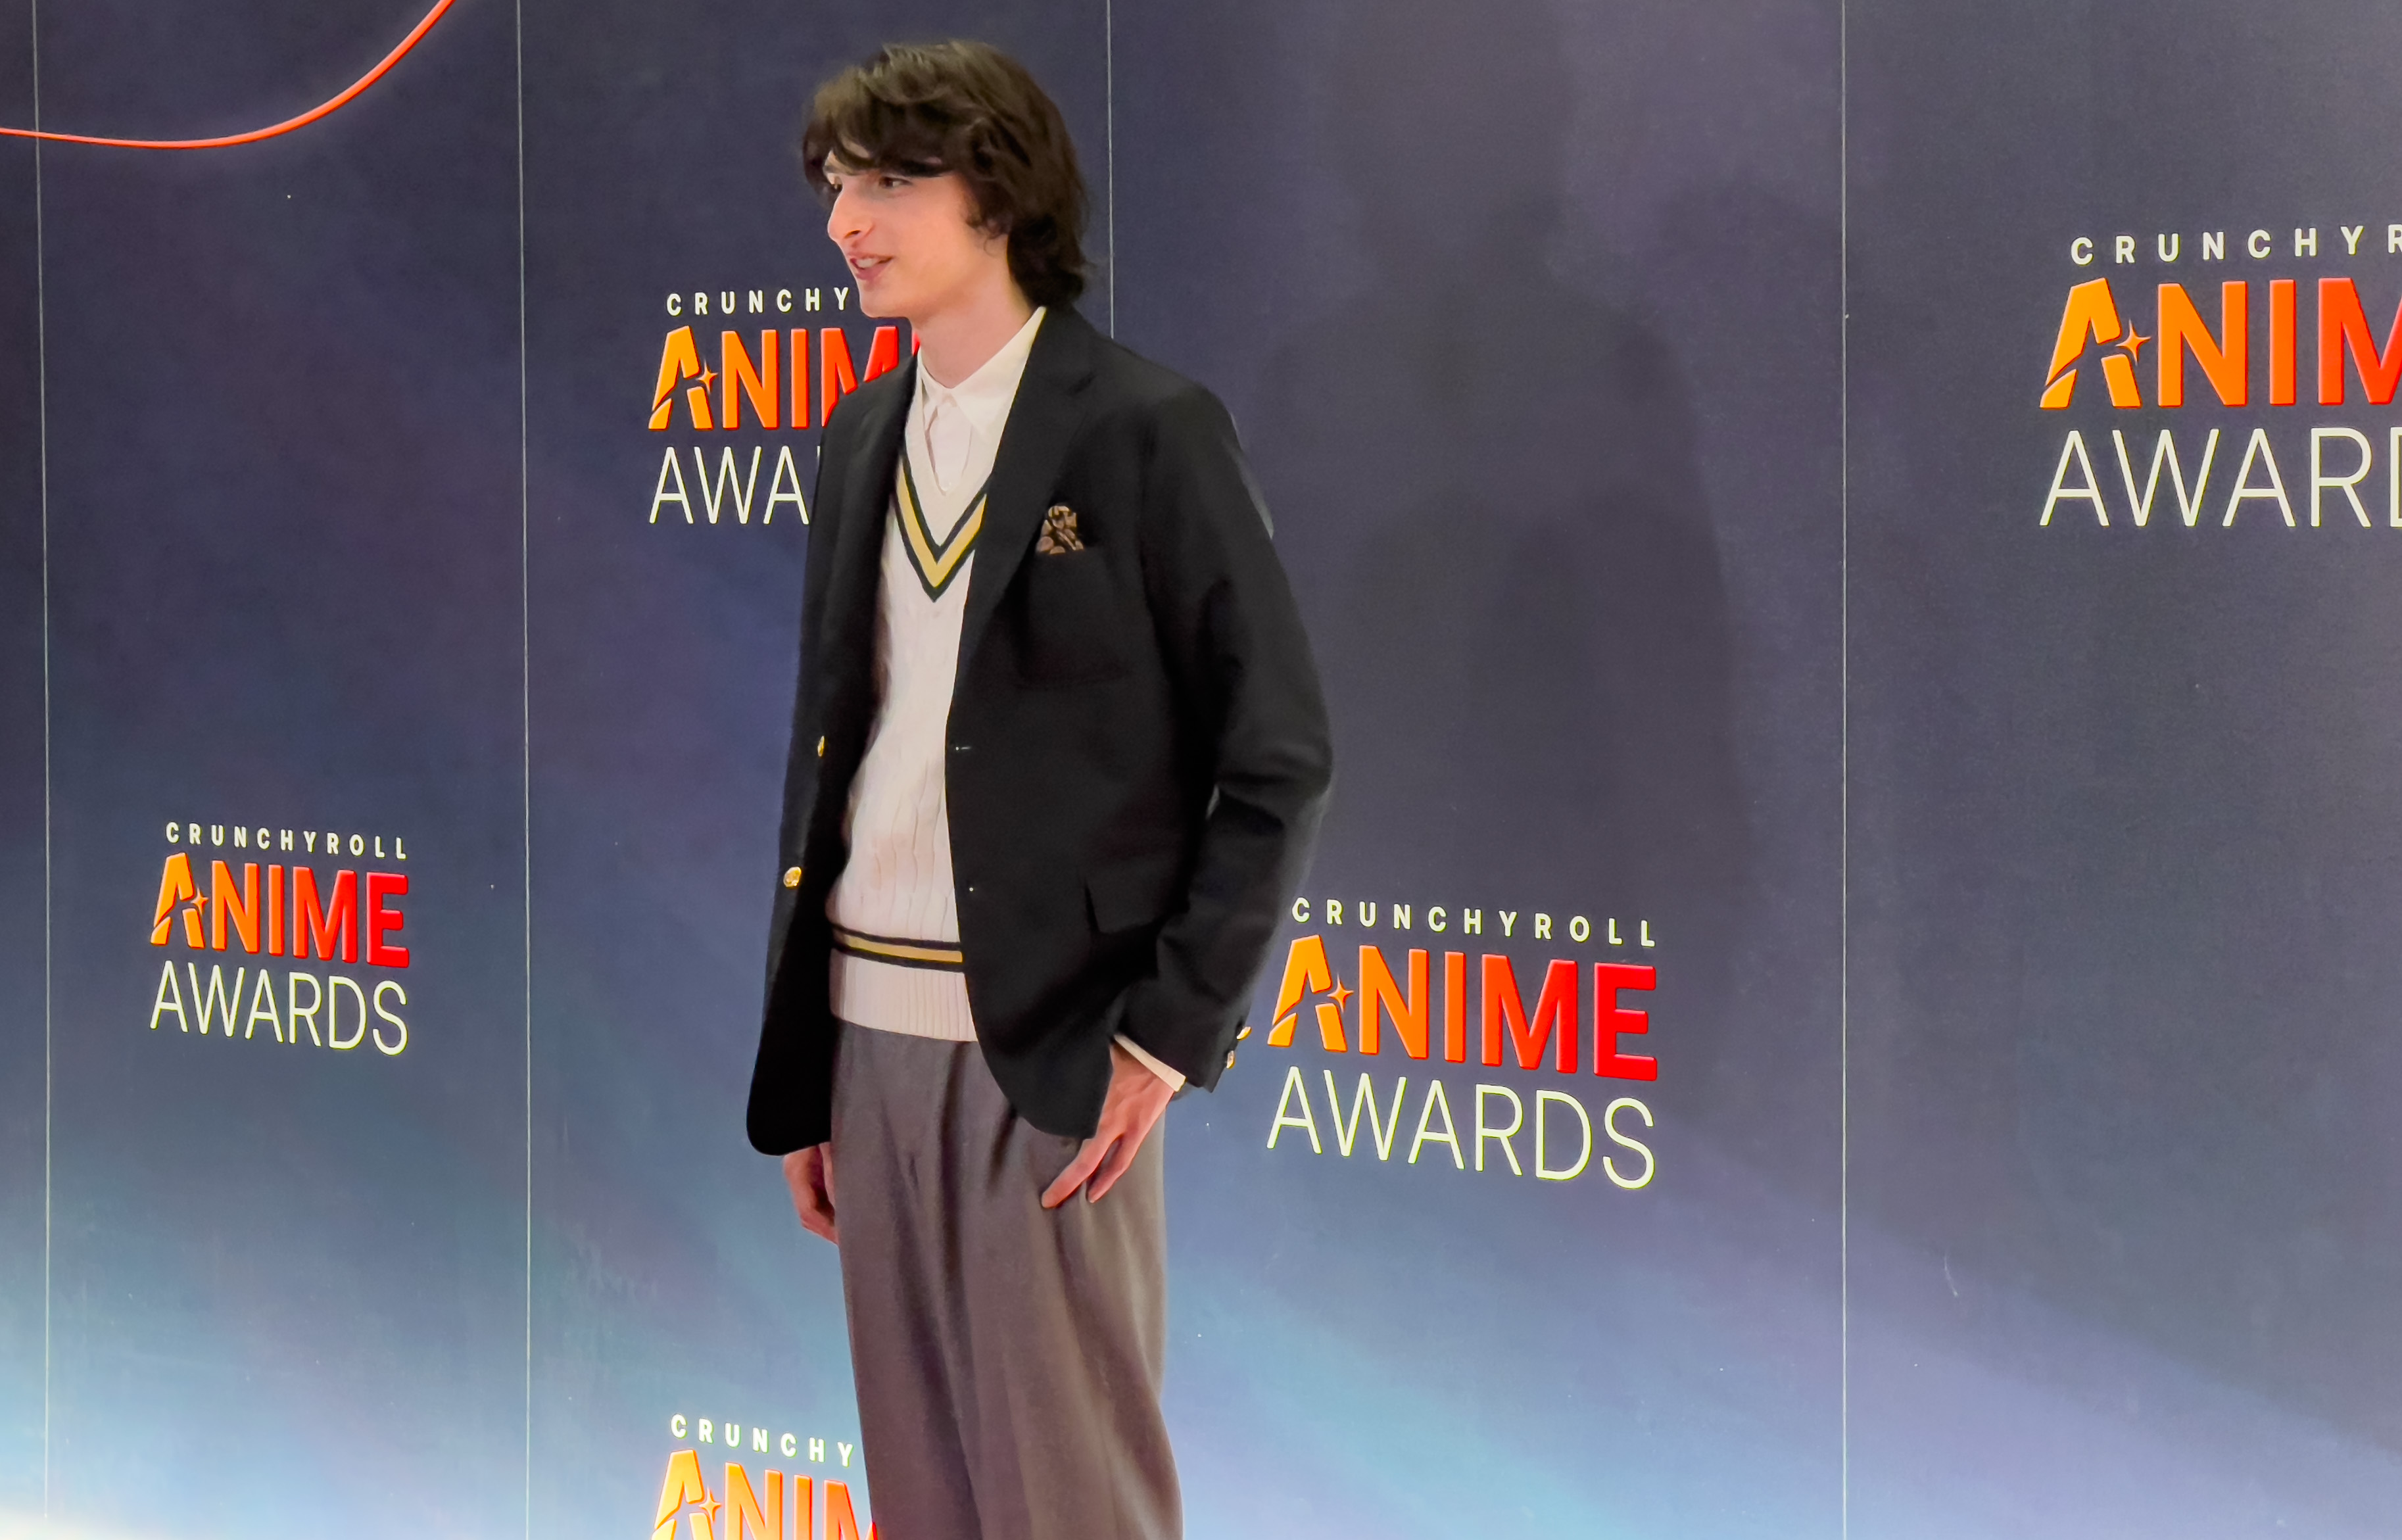 Crunchyroll Anime Awards x Finn Wolfhard